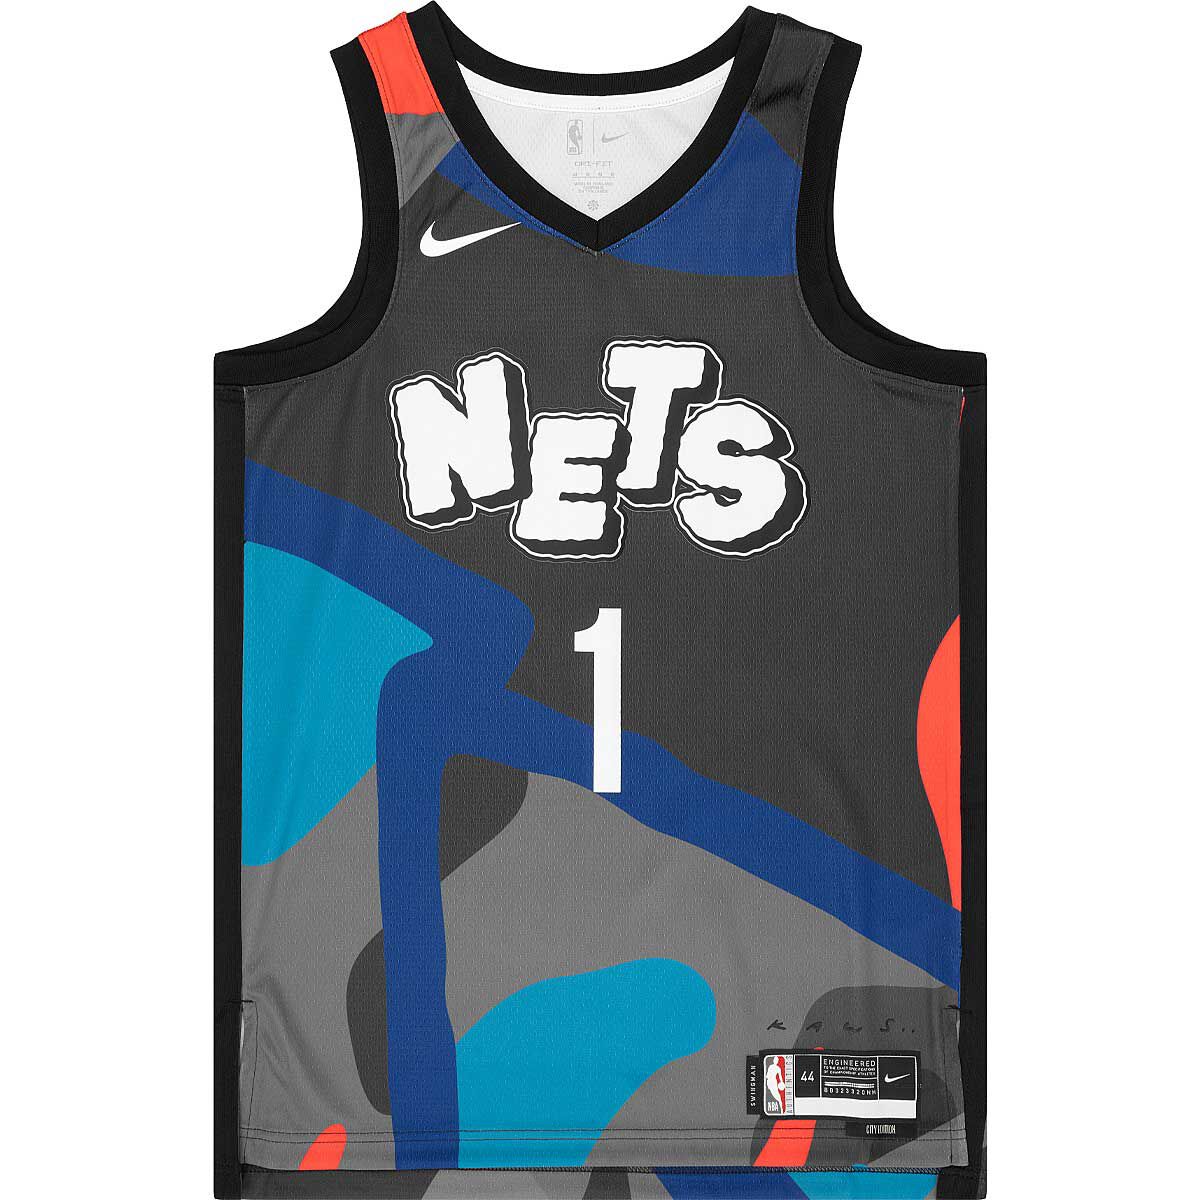 Brooklyn Nets: Buy equipment, jerseys, etc. at KICKZ